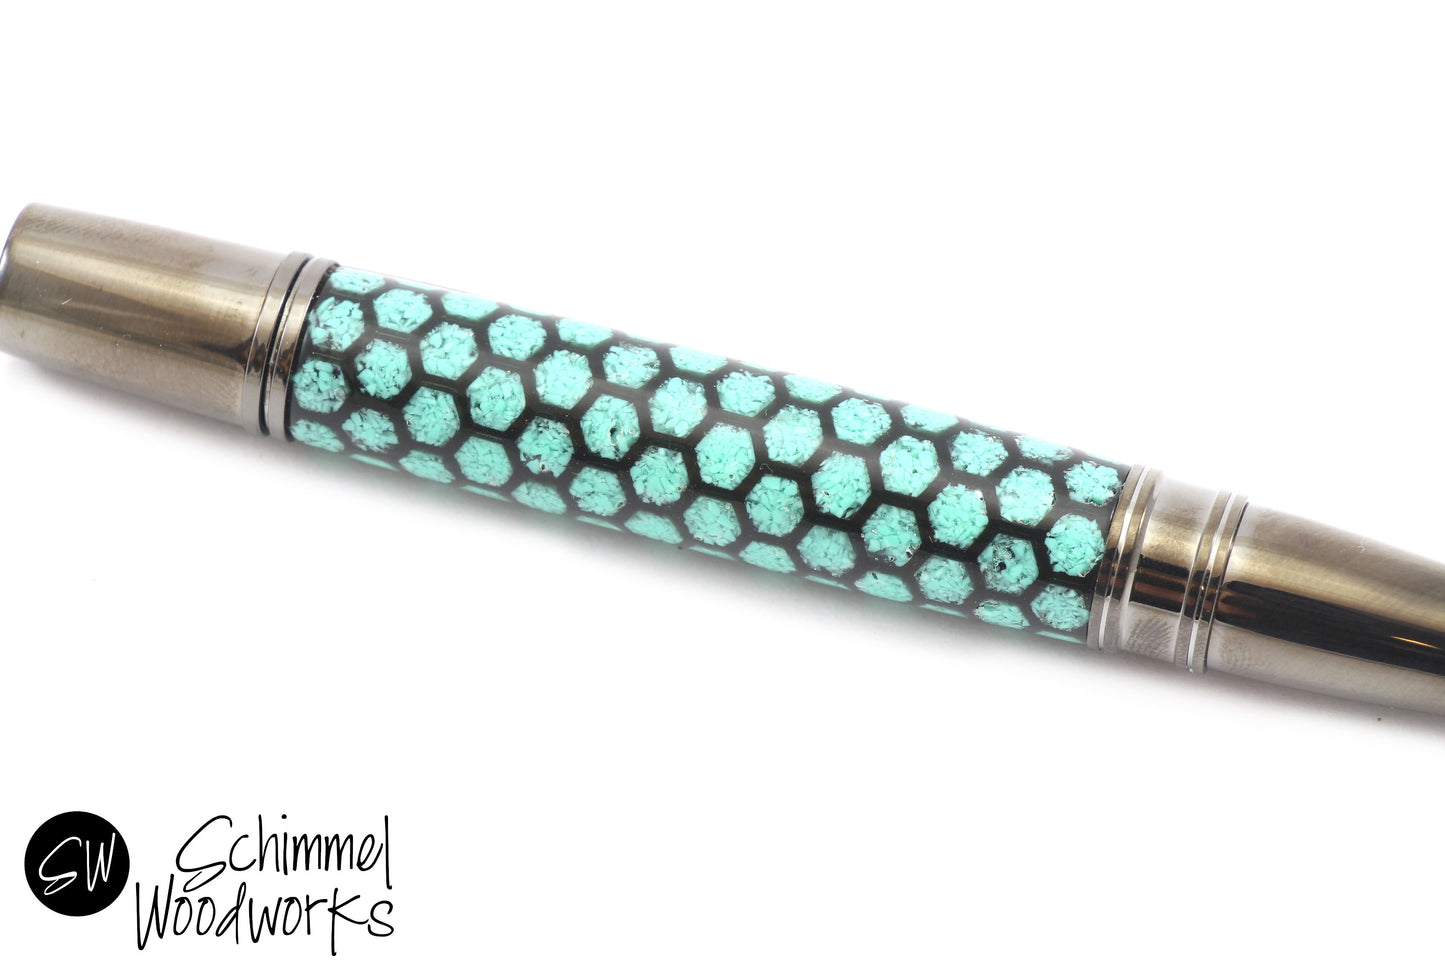 Turquoise Honeycomb Pen